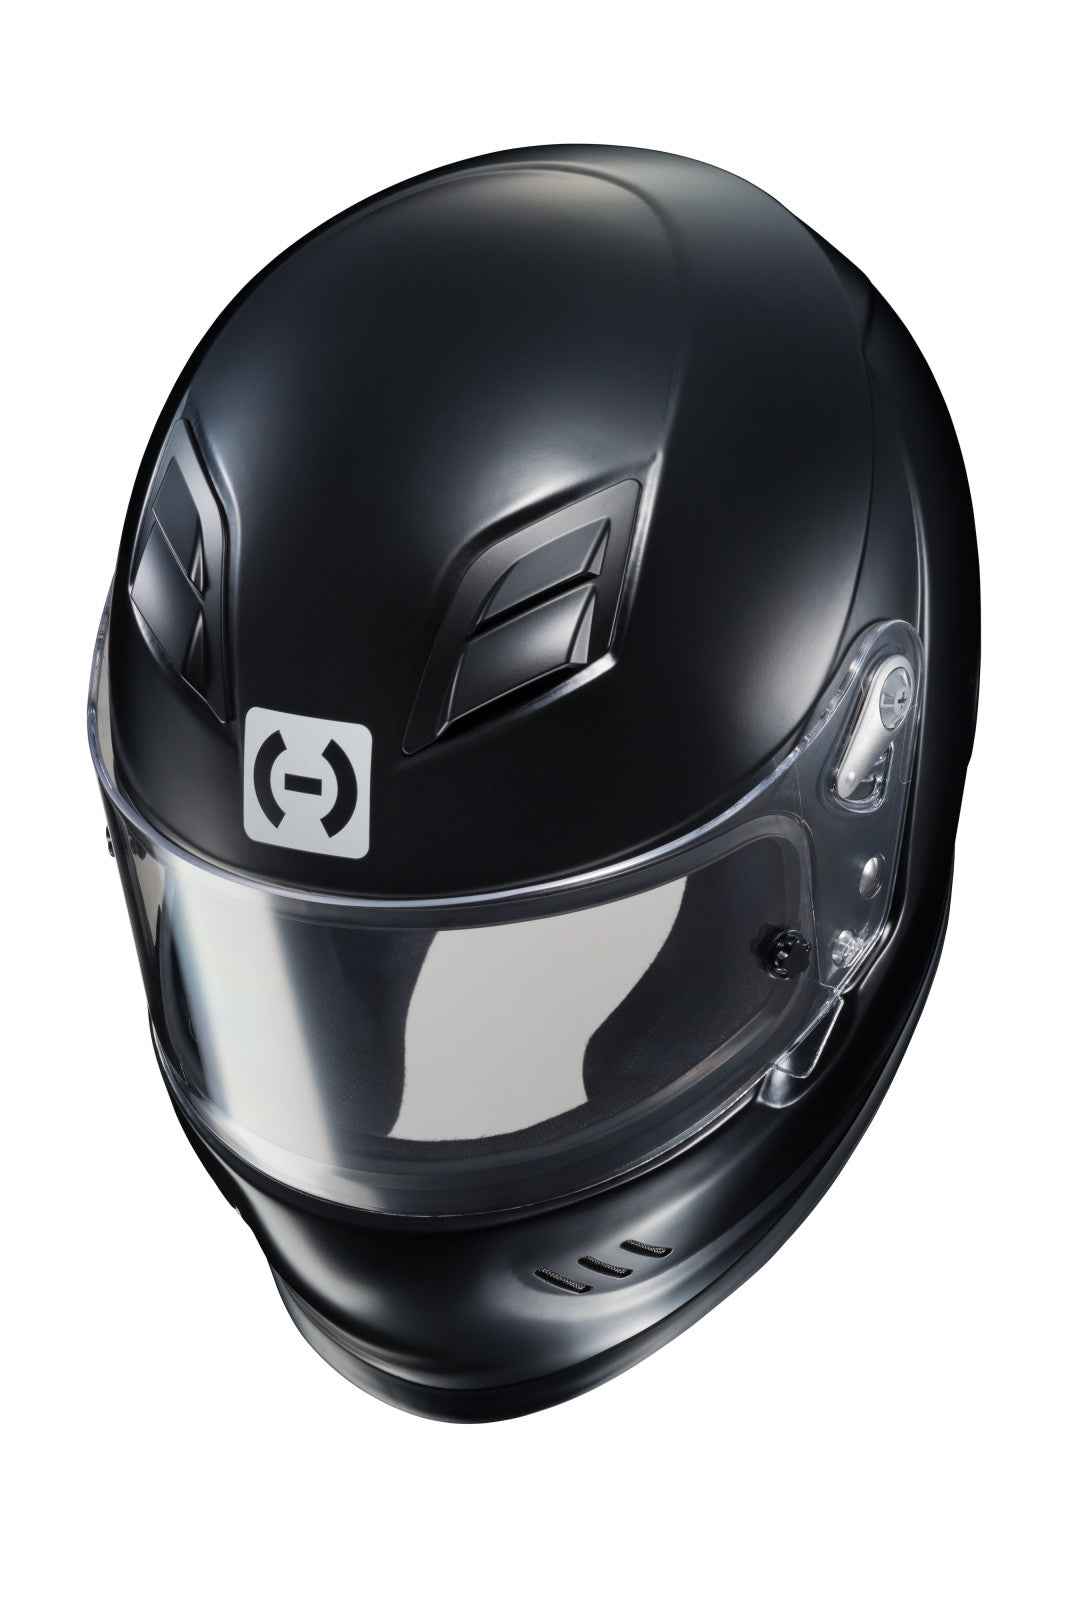 HJC H10 Helmet Black Size M